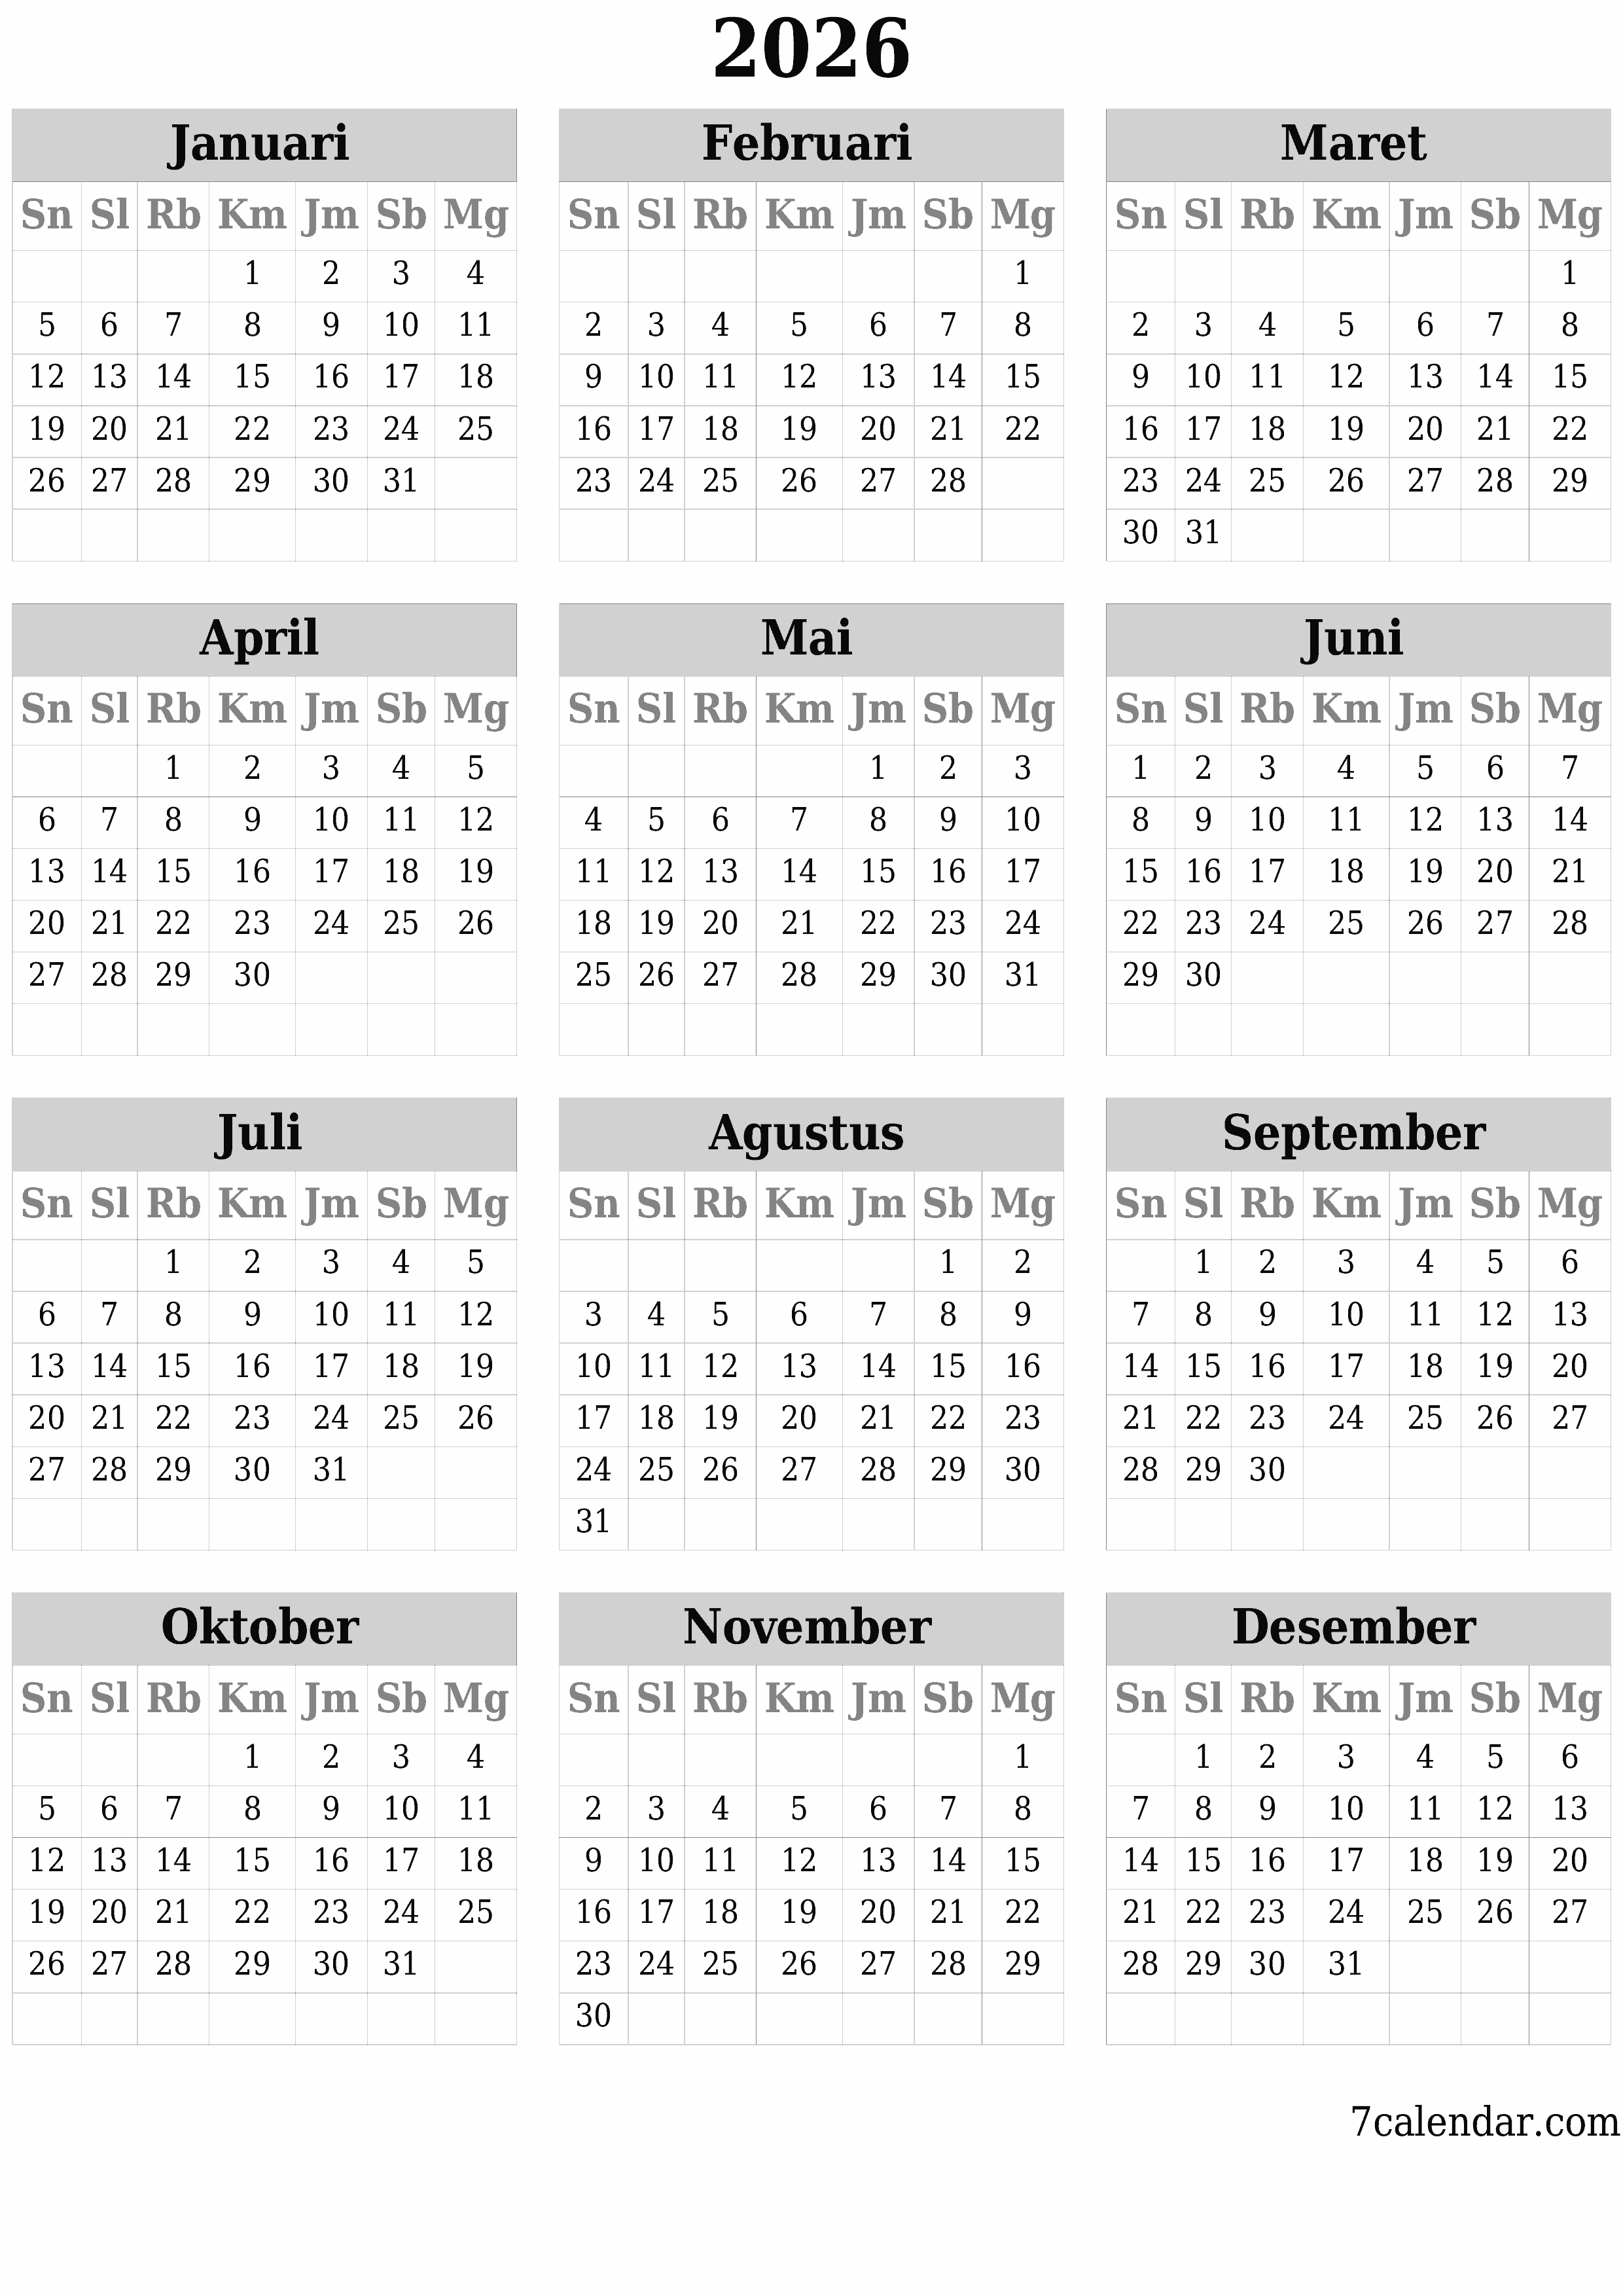  yang dapat dicetak dinding templat gratisvertikal Tahunan kalender Februari (Feb) 2026